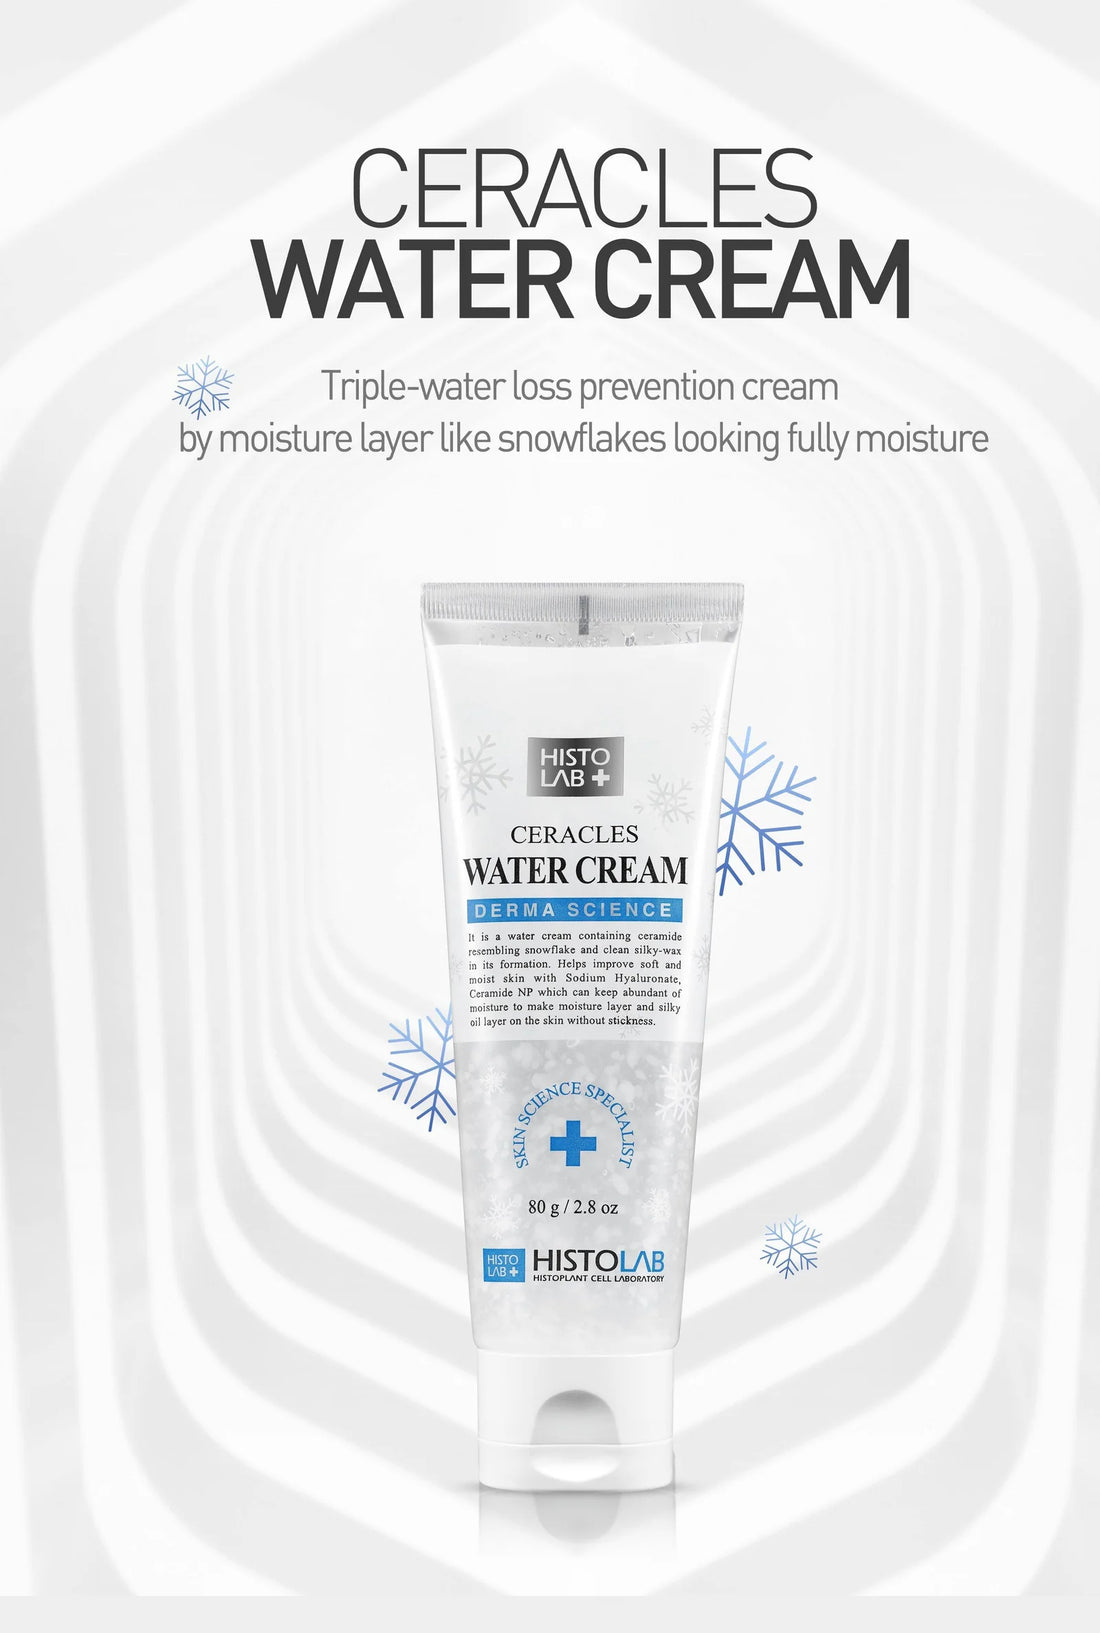 Ceracles Water Cream